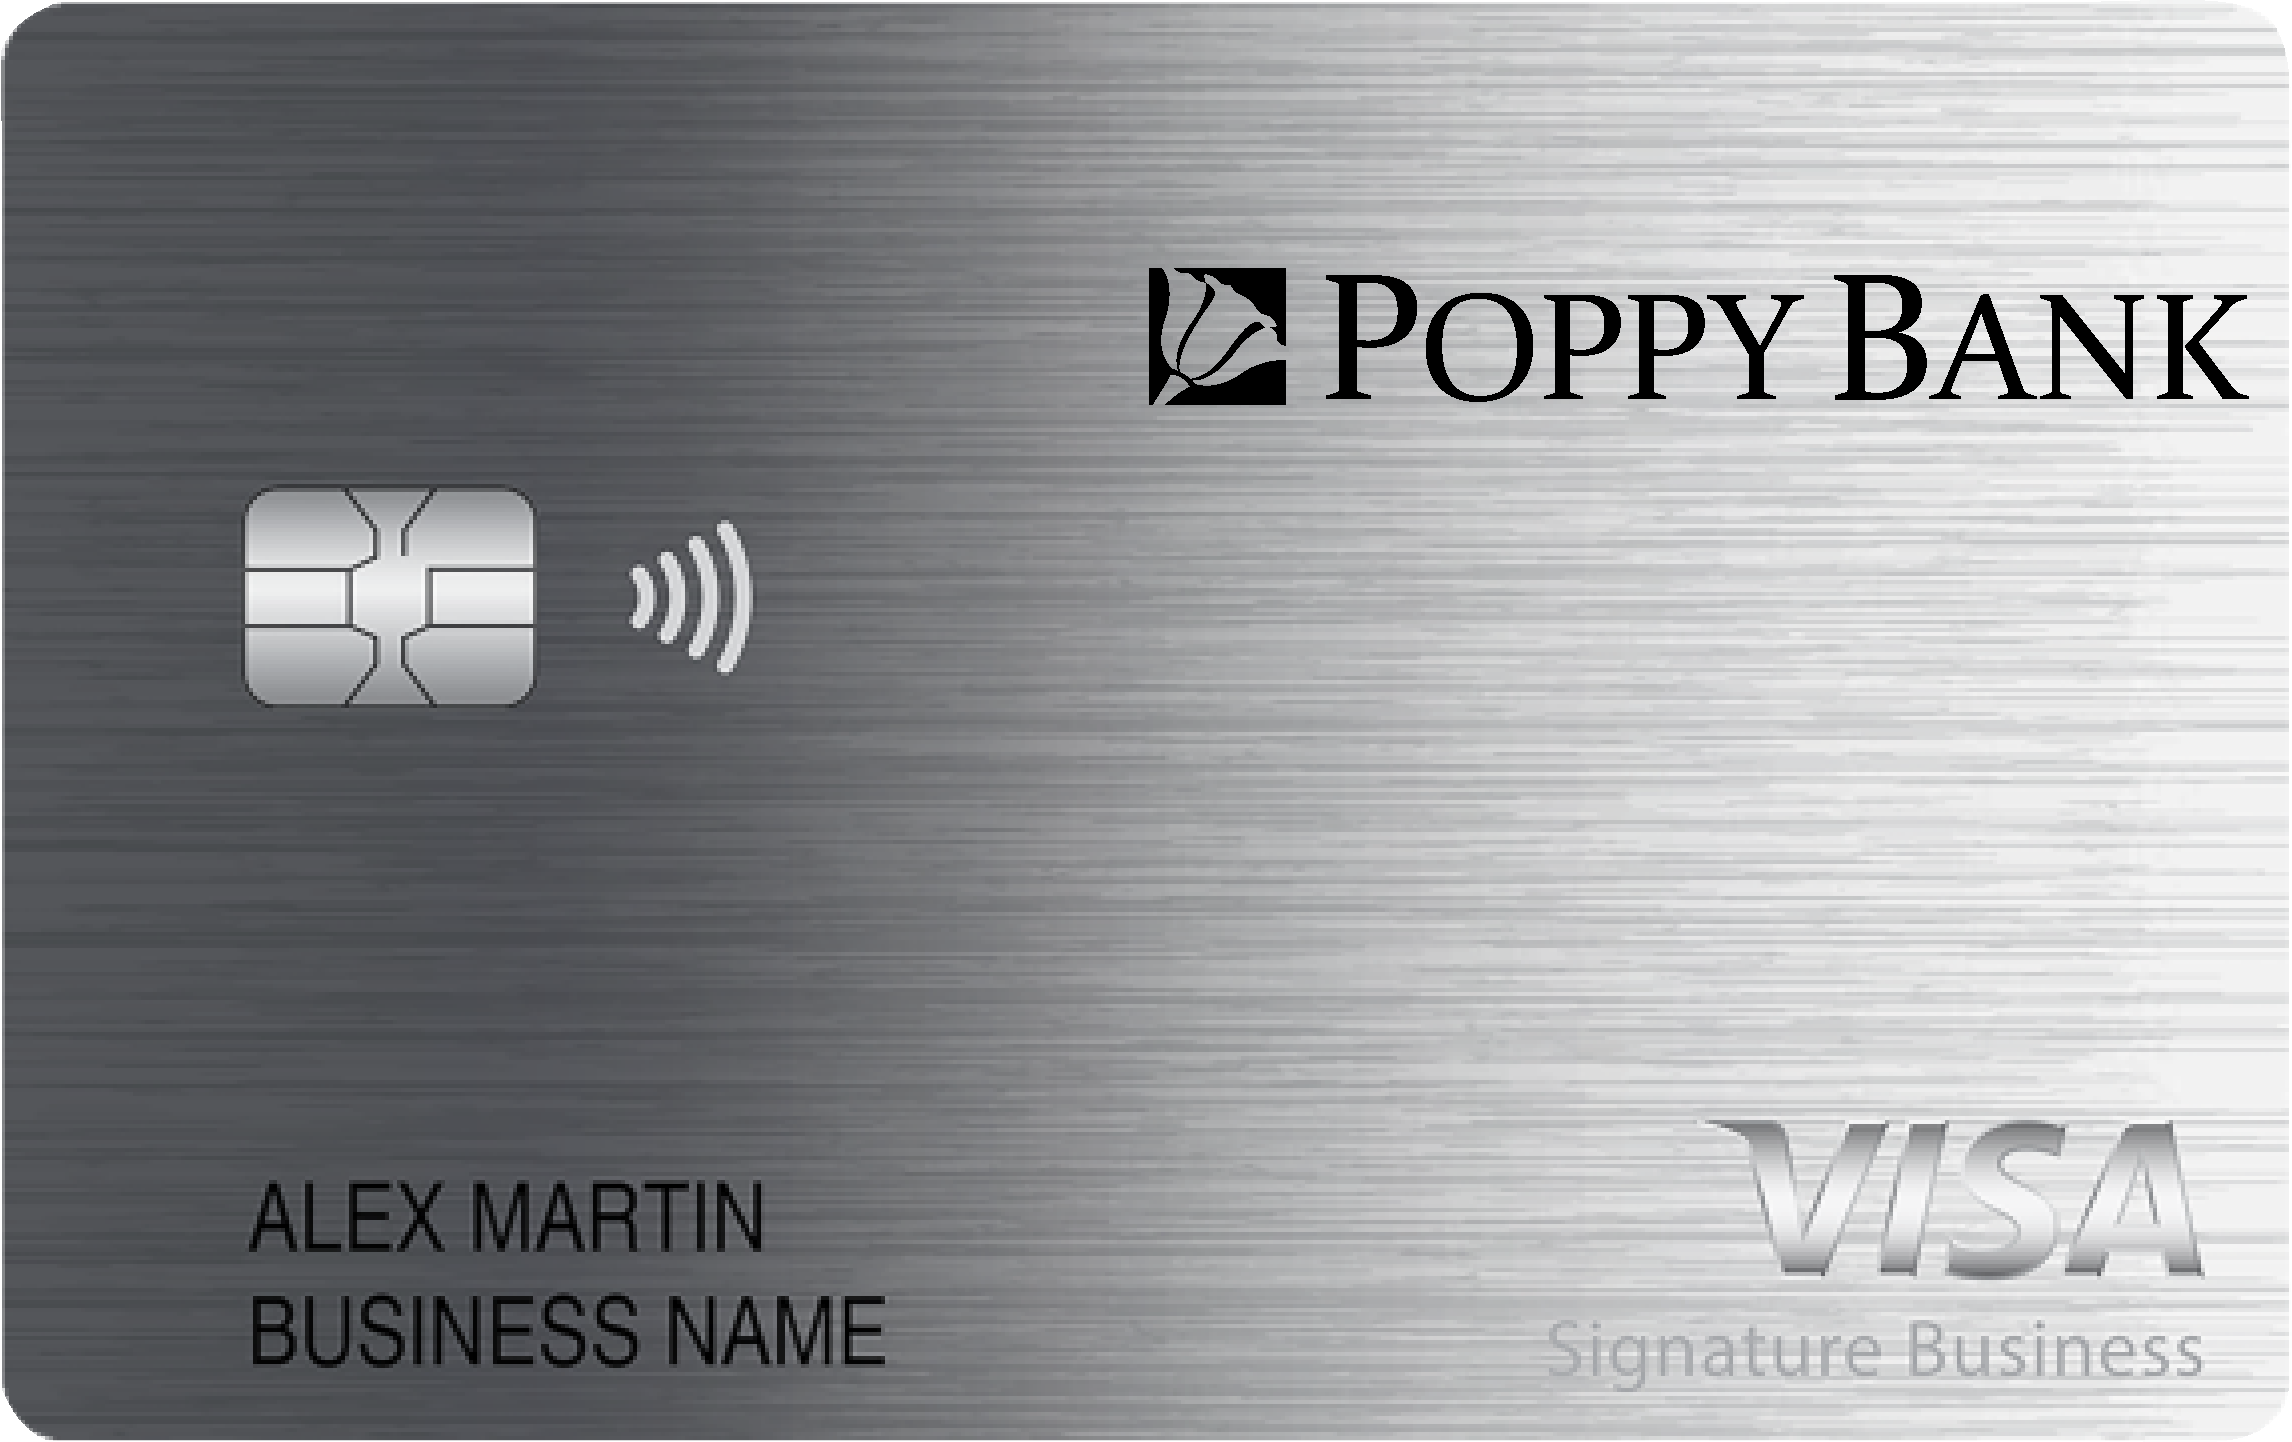 Poppy Bank Smart Business Rewards Card